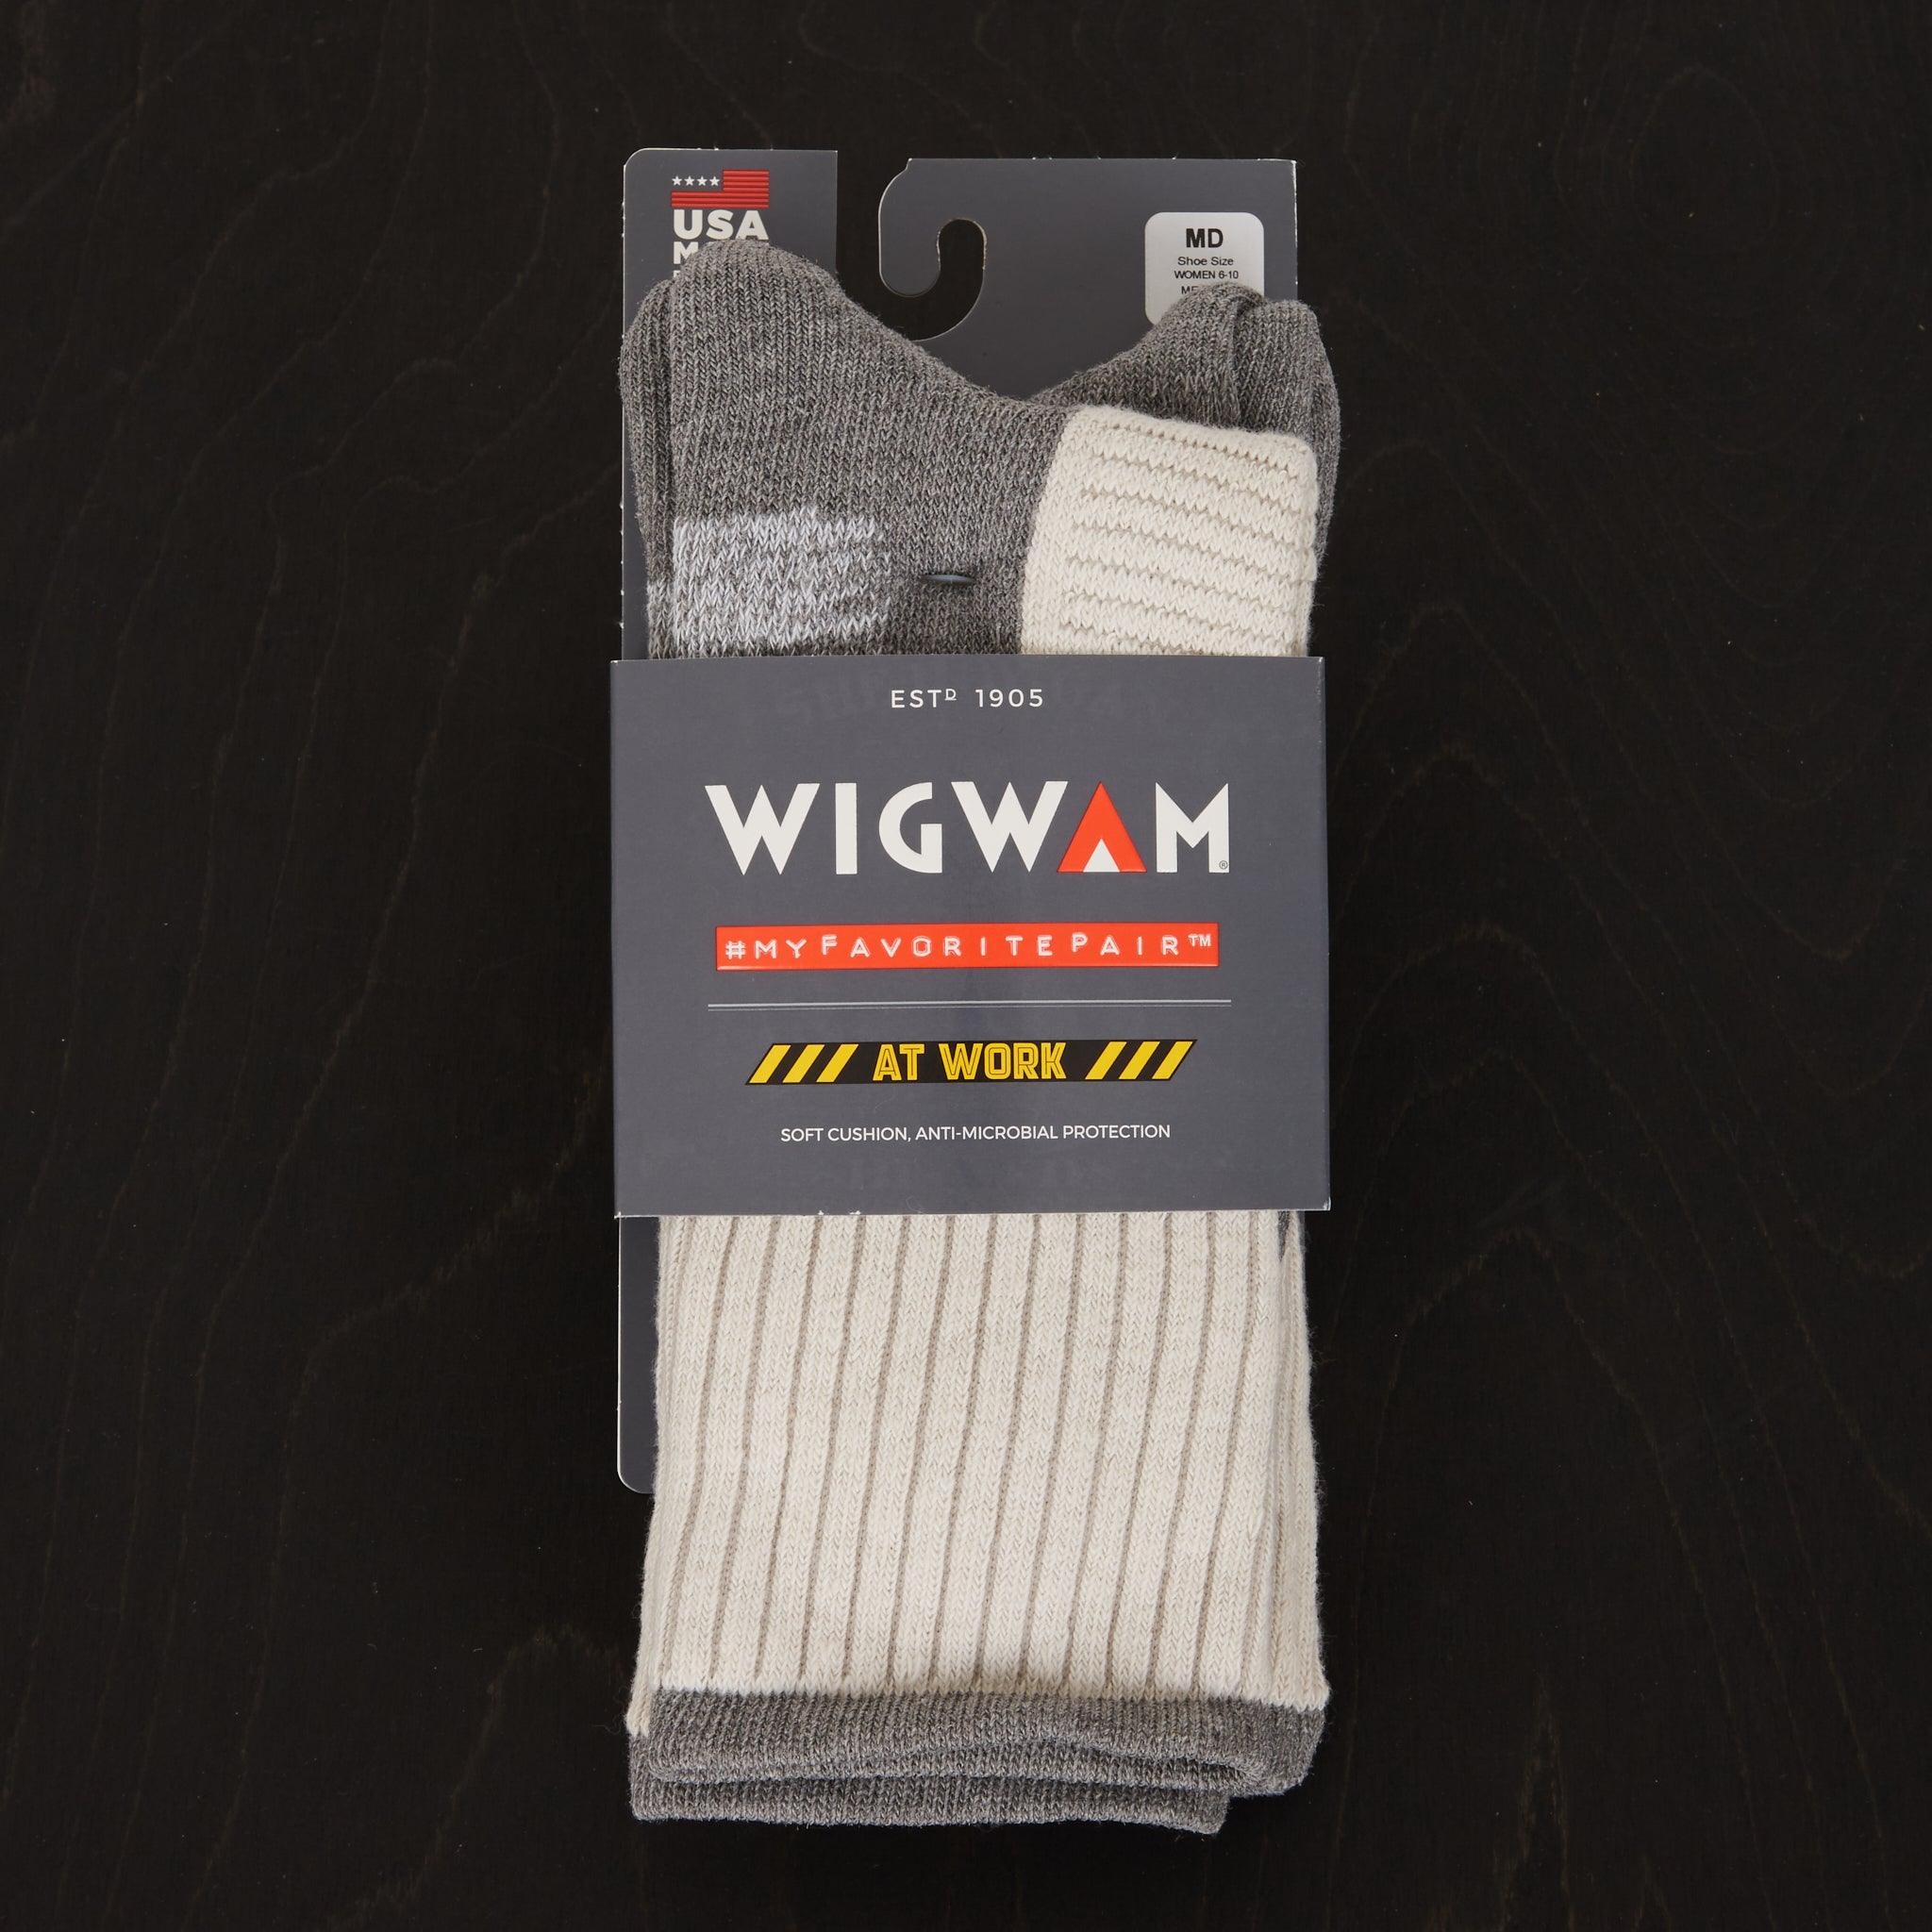 WI-S1349-WHT/GRY - Wigwam At Work DuraSole Pro 2-Pack Socks White/Grey